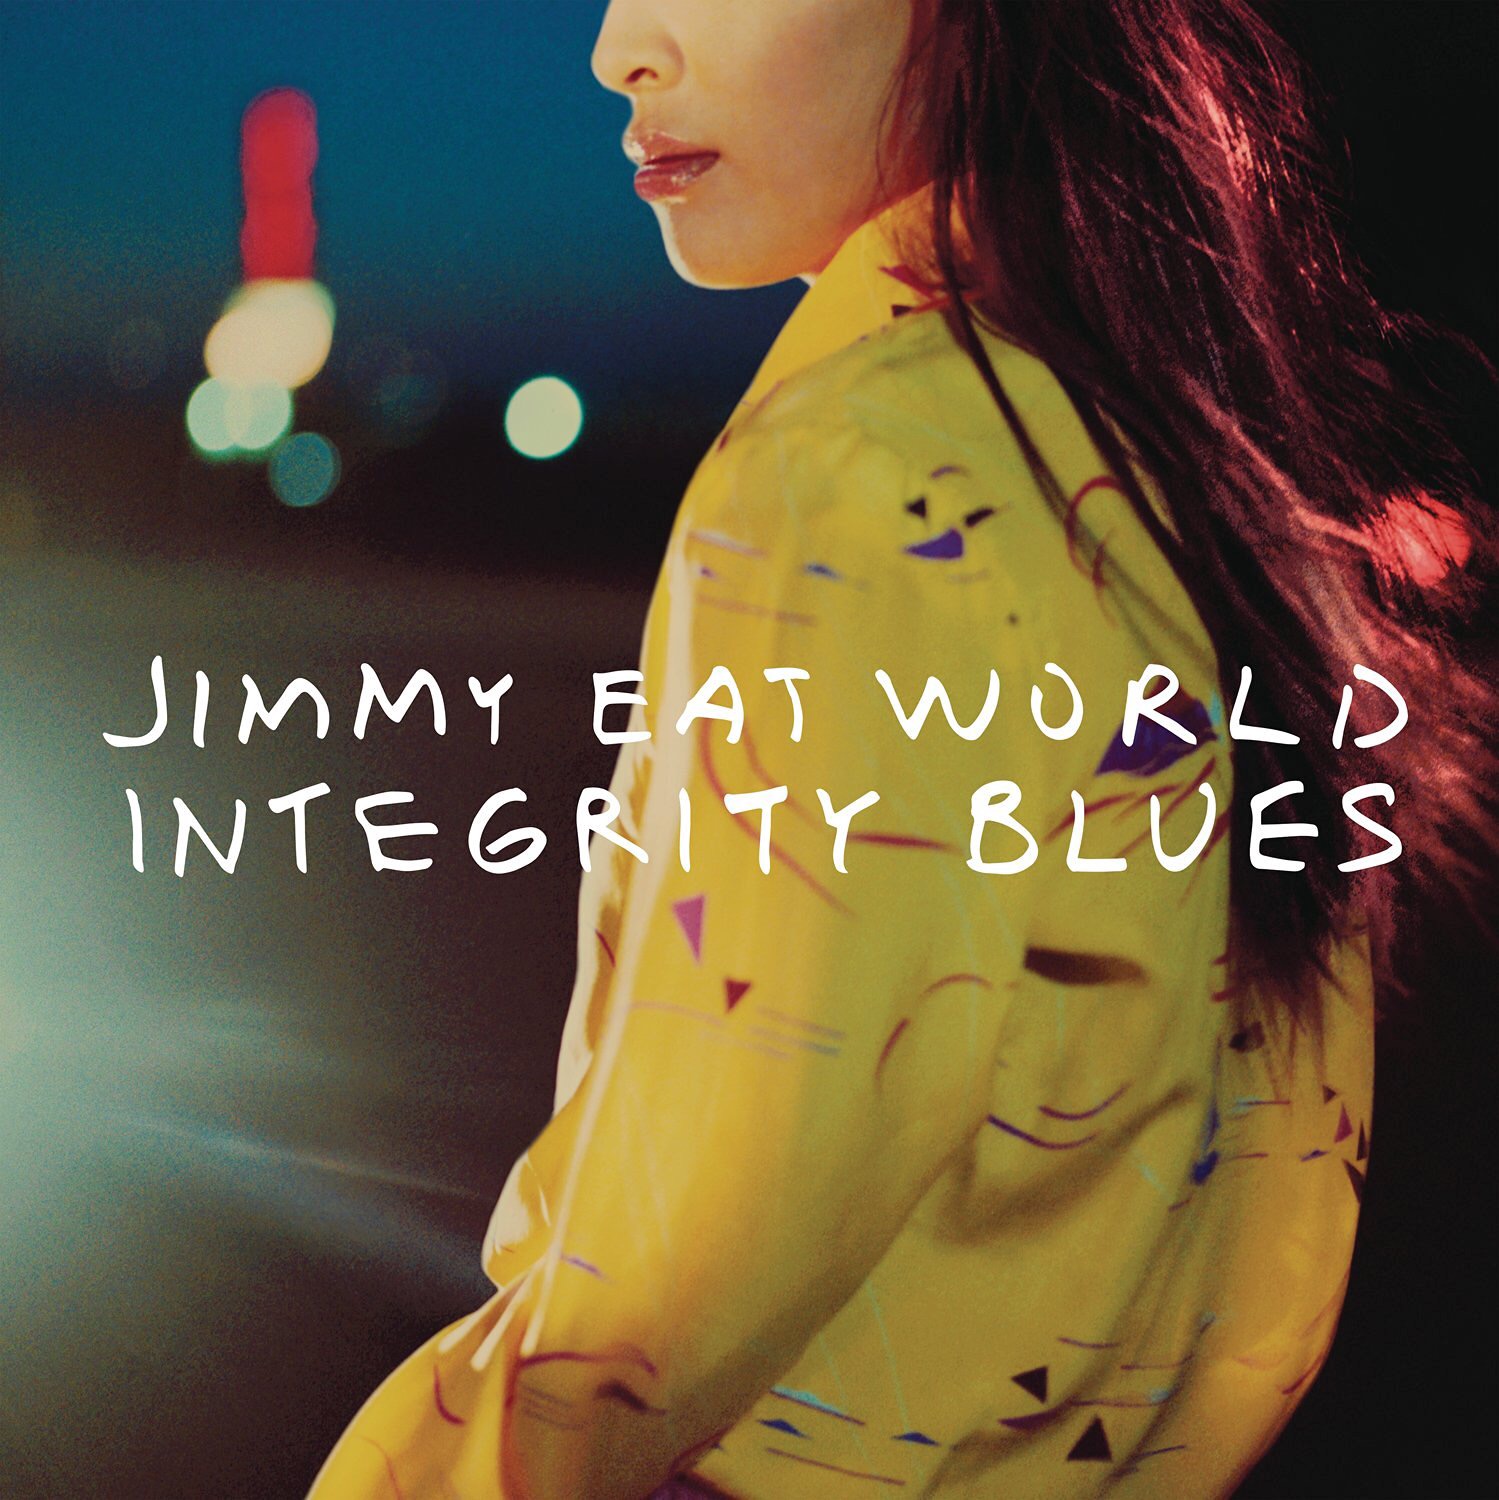 Jimmy Eat World - Integrity Blues (2016)